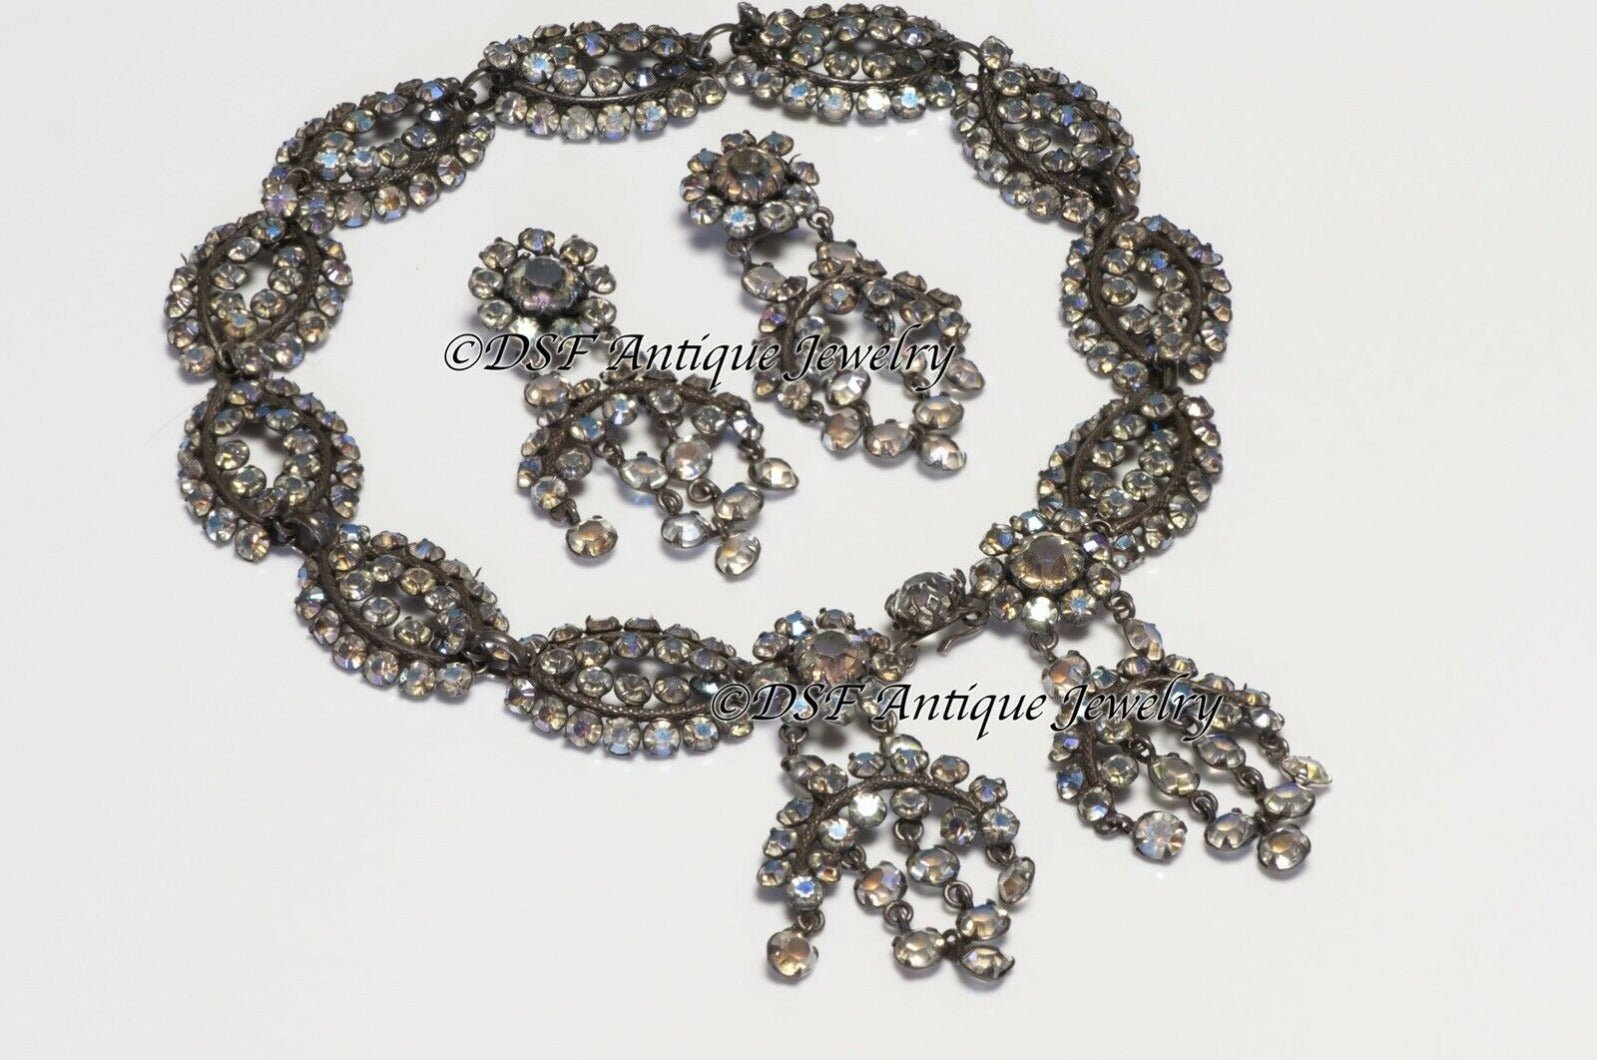 Elsa Schiaparelli Roger Jean-Pierre Couture 1930’s Crystal Necklace Earrings Set - DSF Antique Jewelry